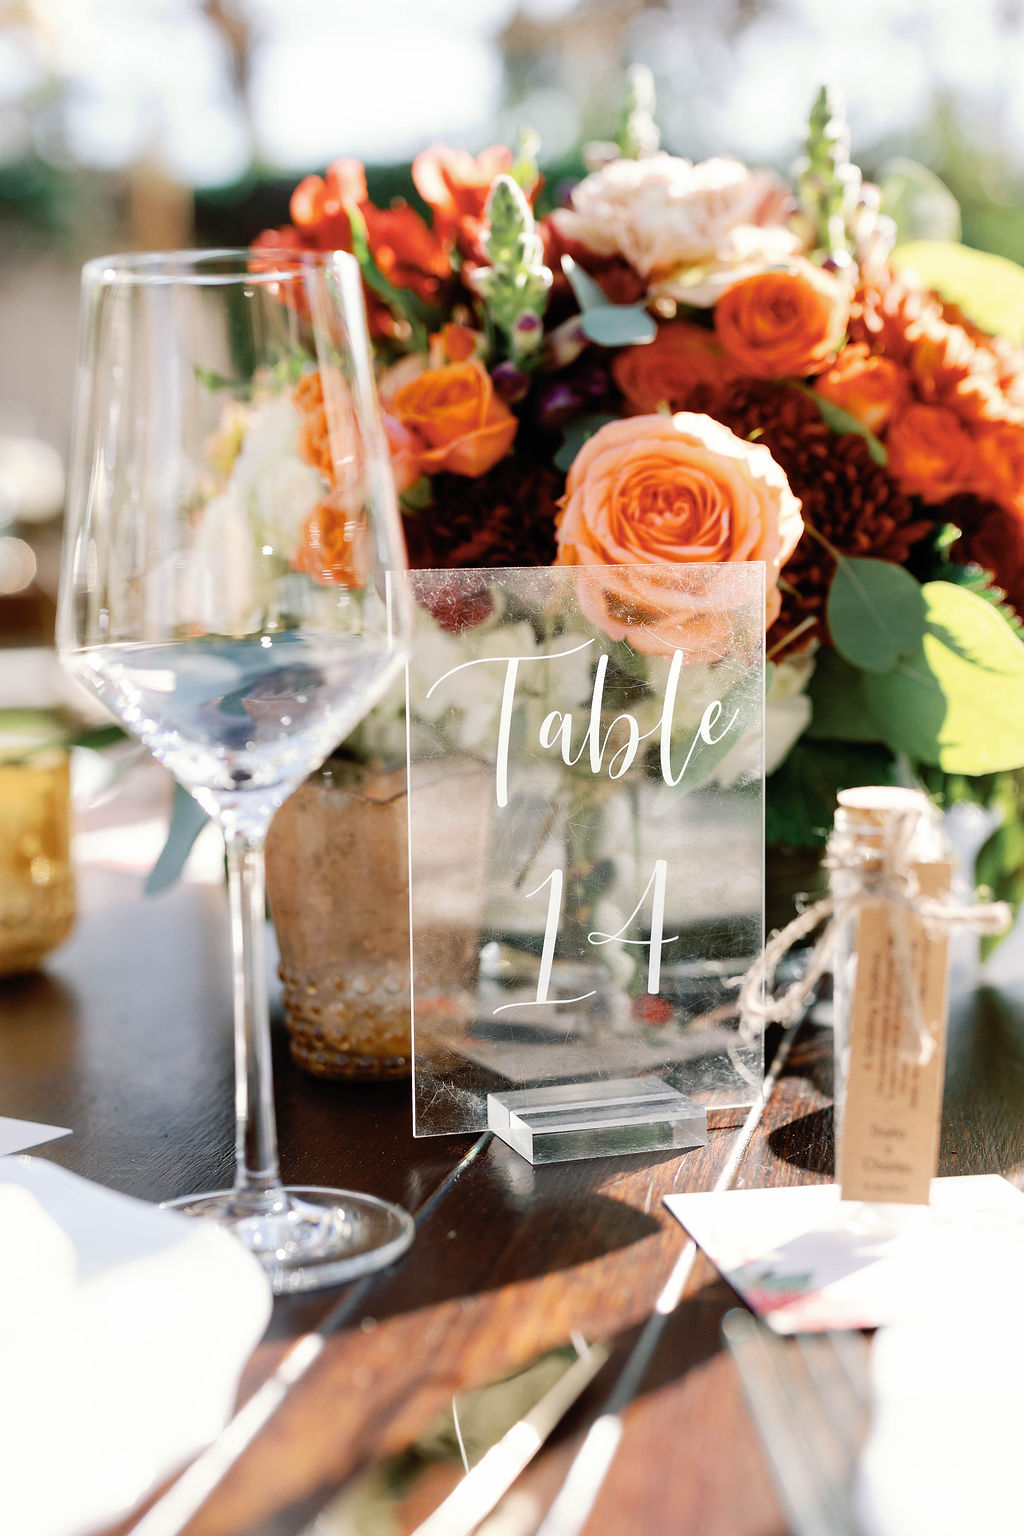 Tablescape at the reception at Mission Santa Barbara wedding | Photo by Sarah Block Photography